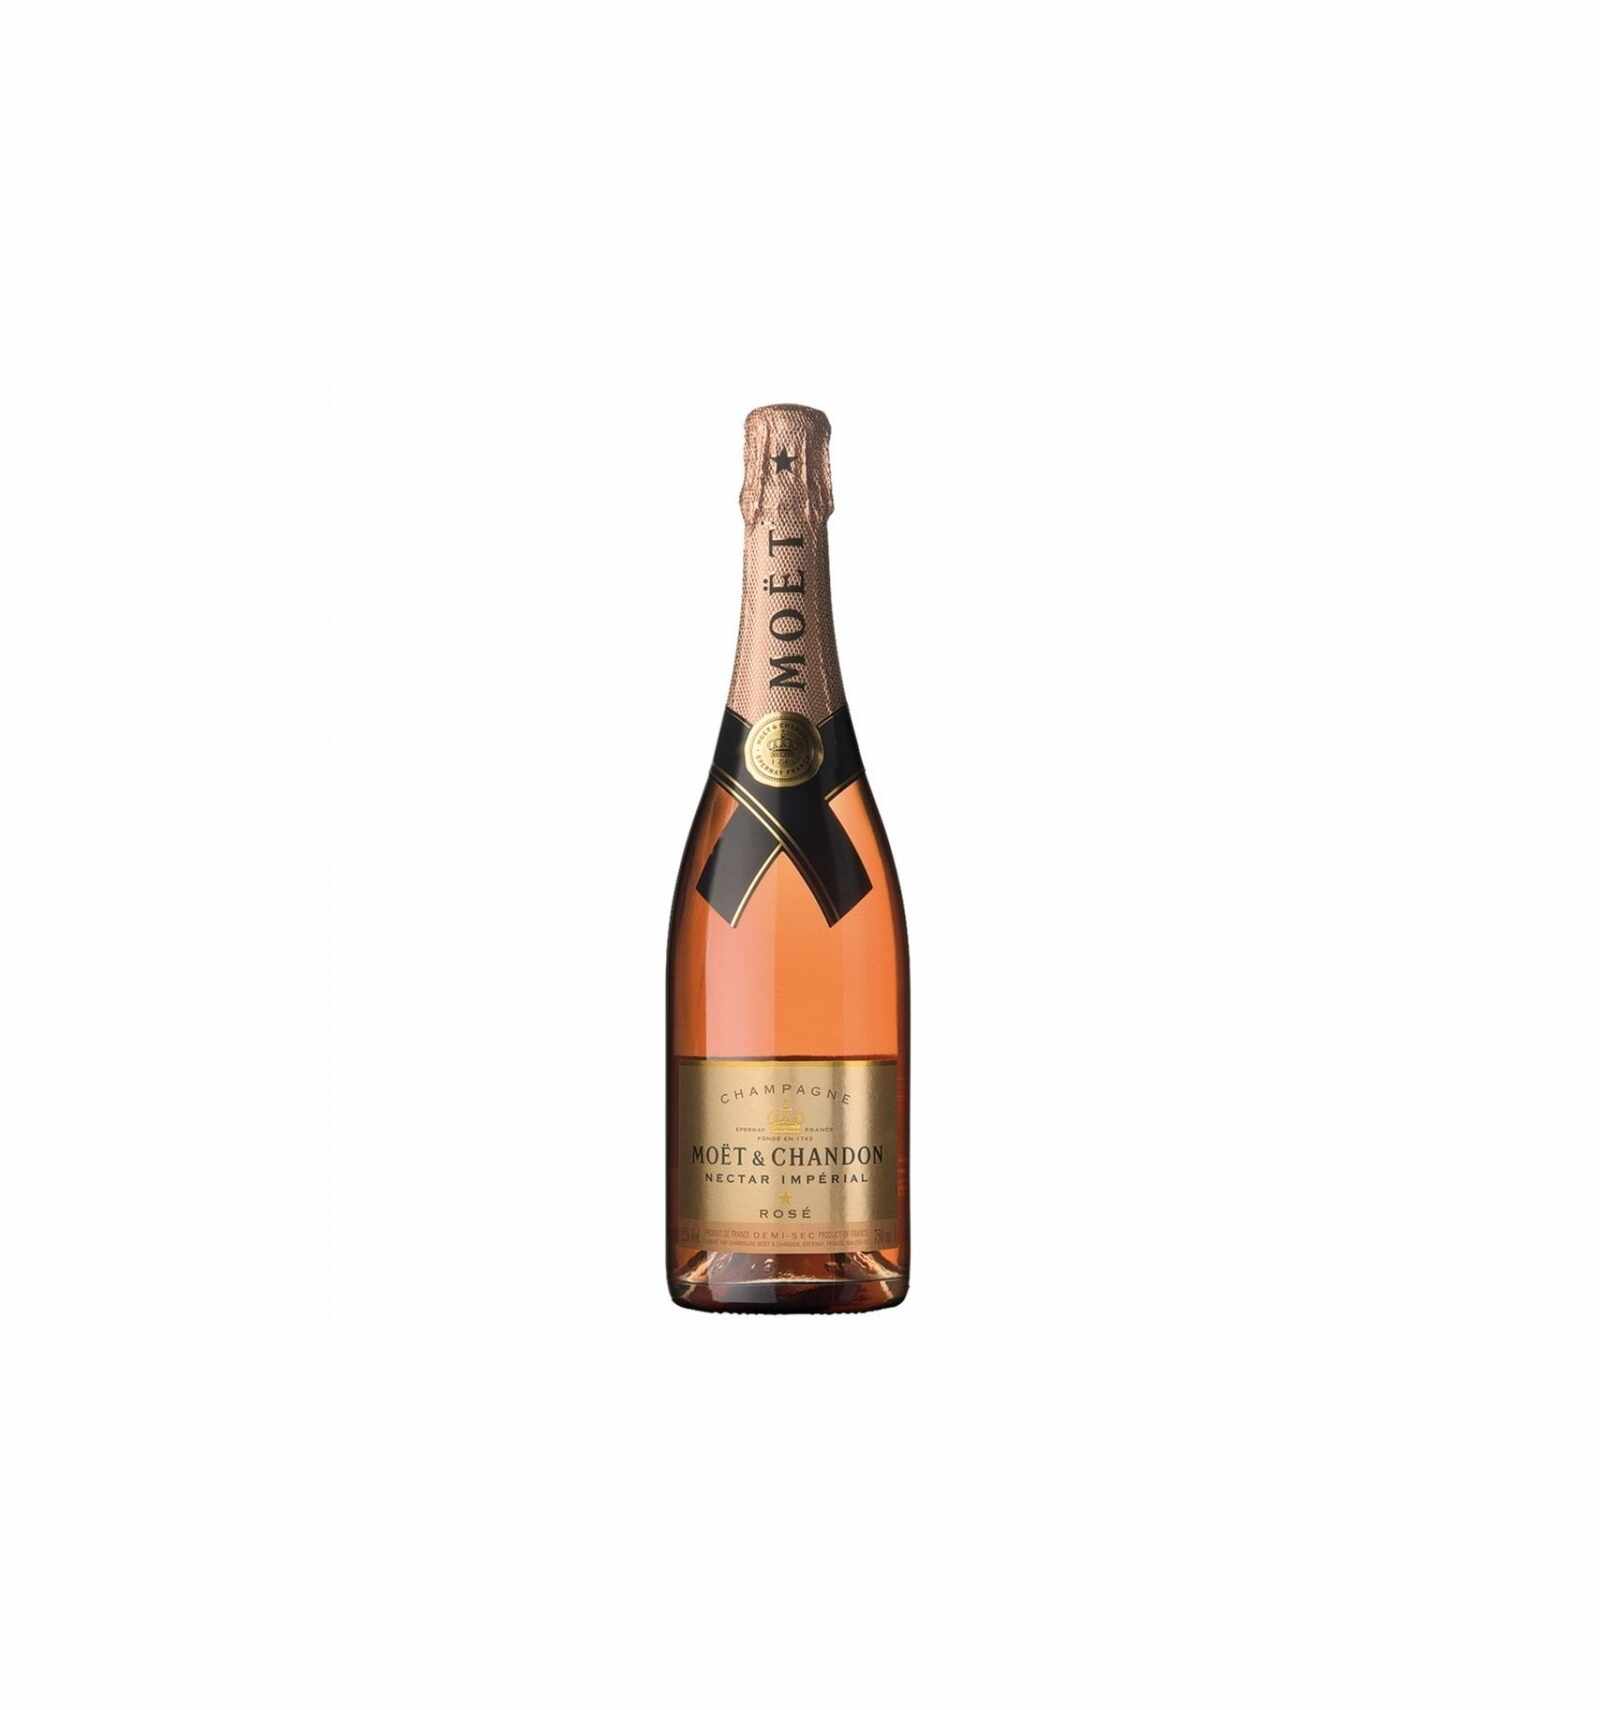 Sampanie MoÃ«t & Chandon Nectar Imperial RosÃ© Champagne, 0.75L, 12% alc., Franta